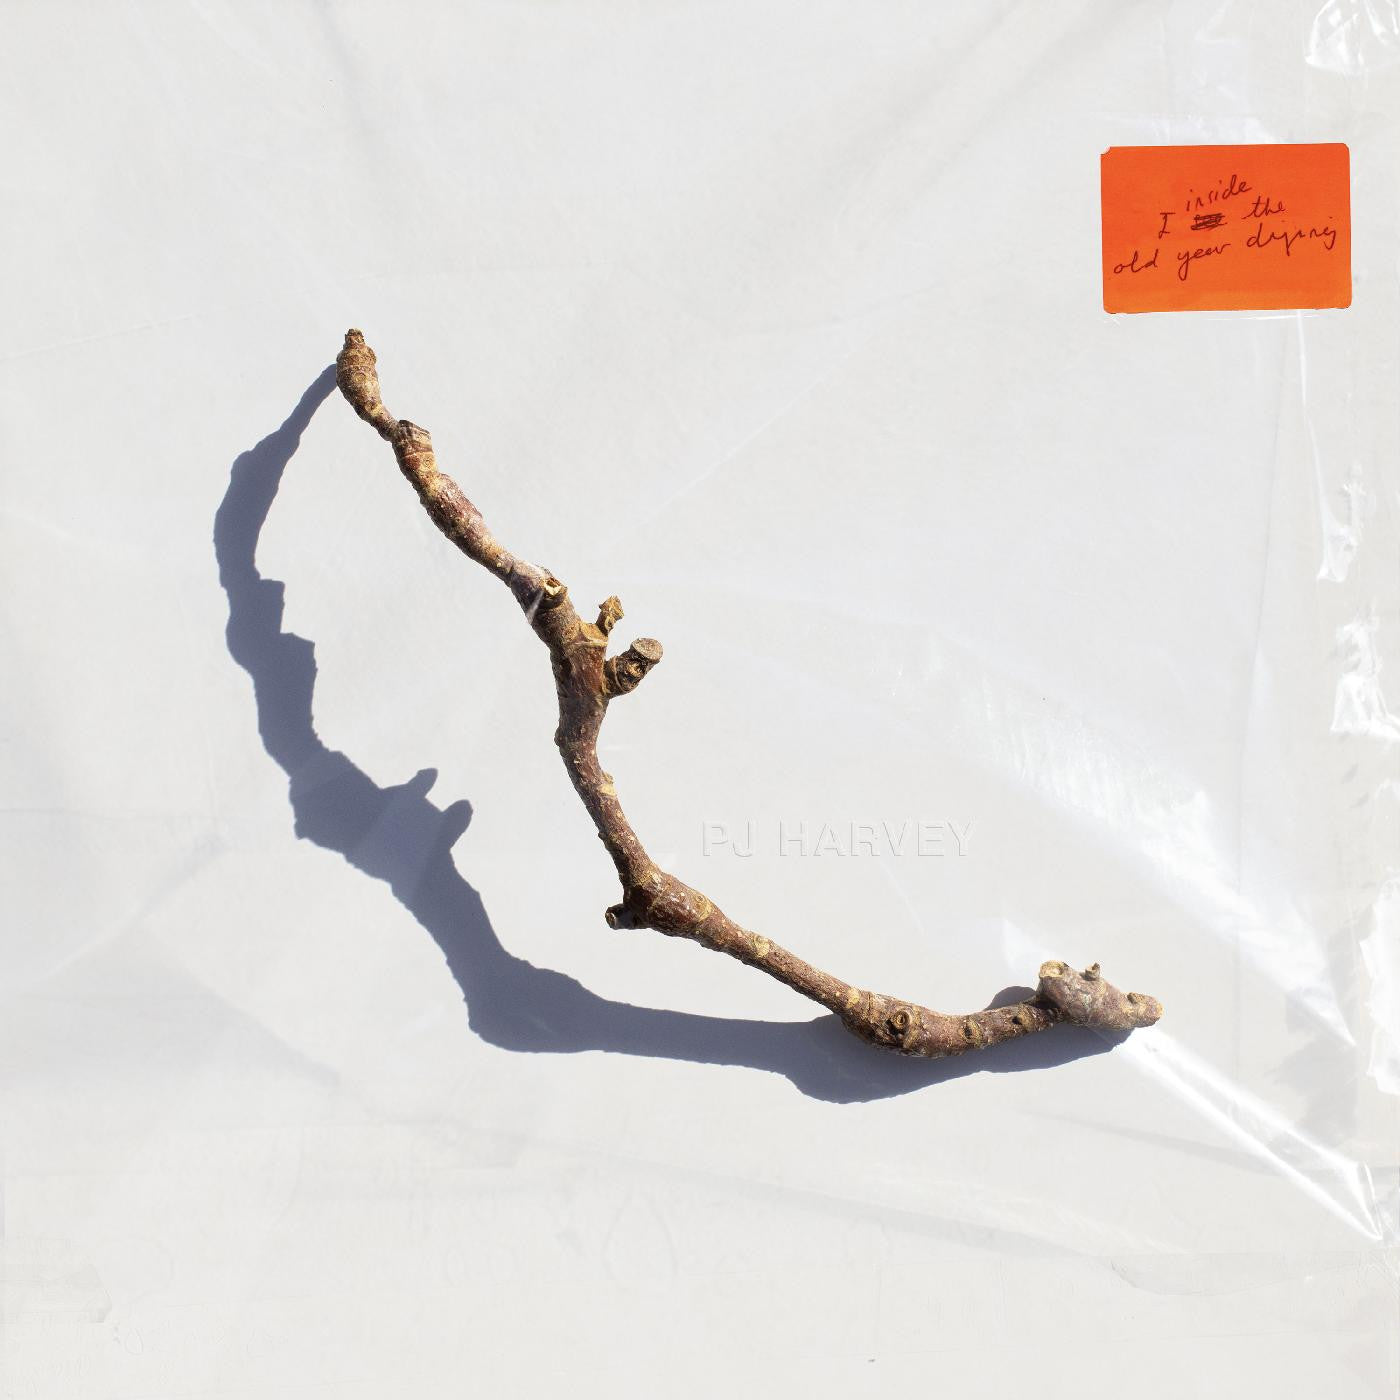 PJ Harvey - I Inside the Old Year Dying (Vinyl LP)